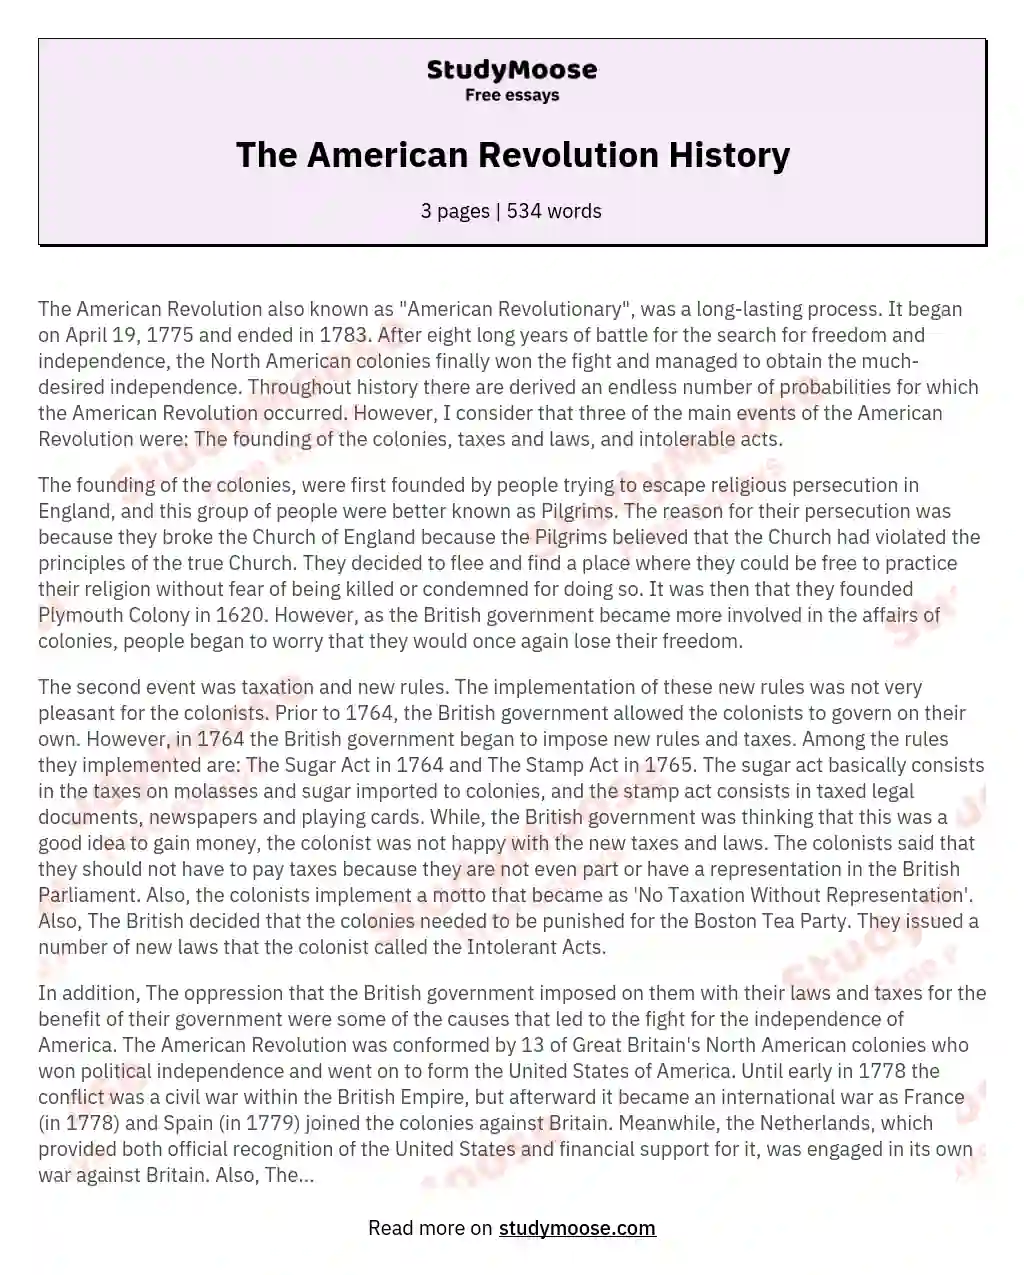 The American Revolution History essay